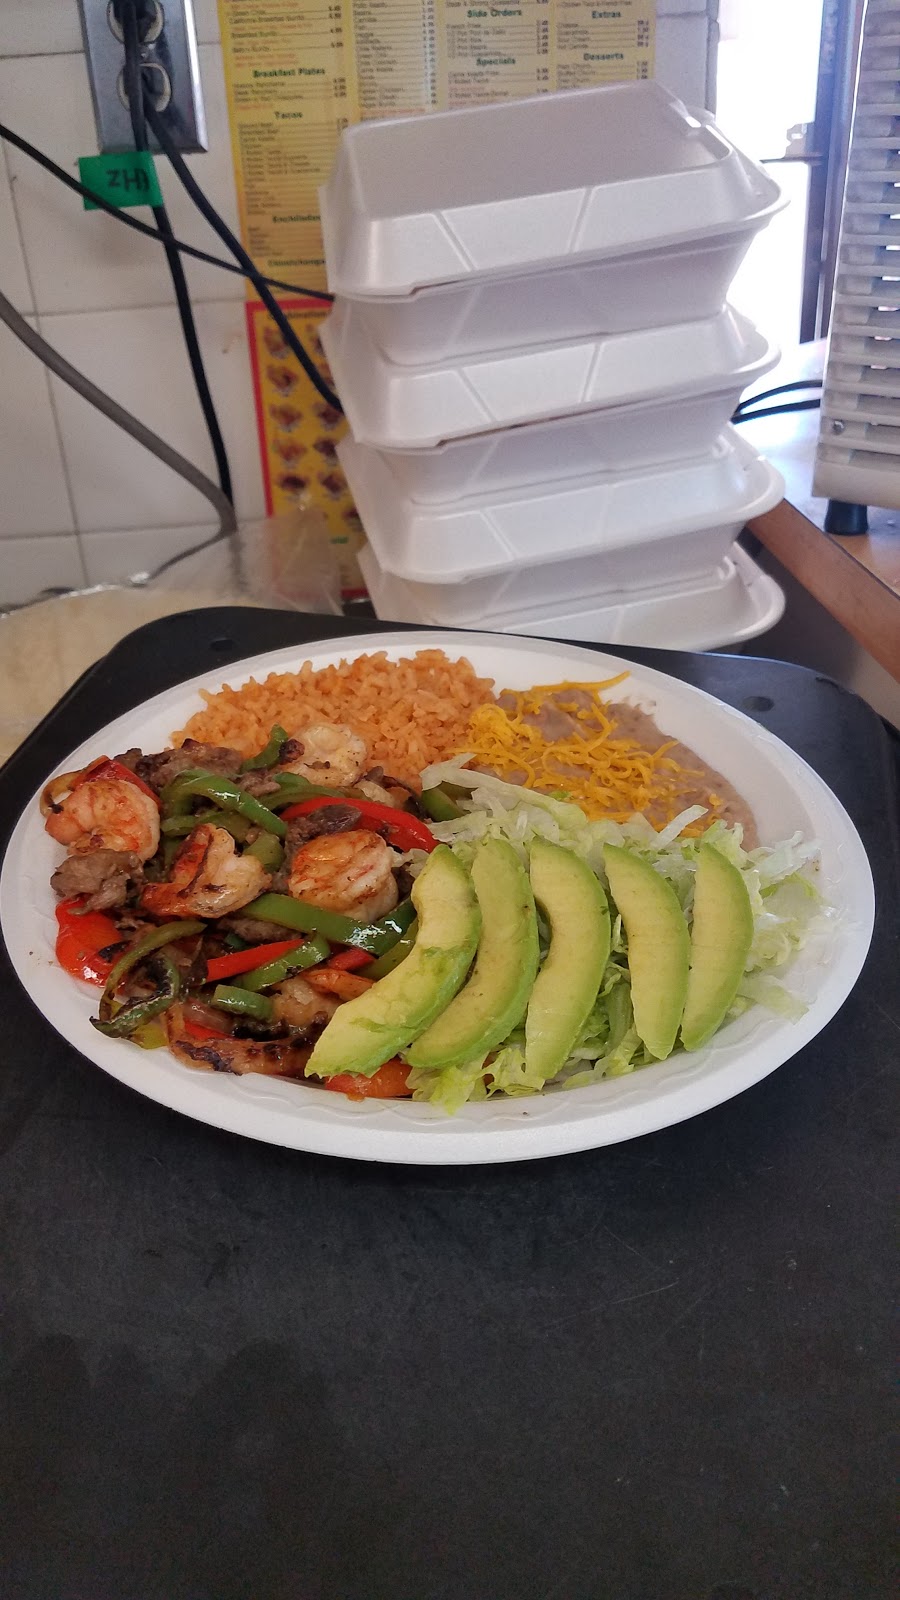 Los Betos Mexican Food | 3567 N Oracle Rd, Tucson, AZ 85705 | Phone: (520) 293-1581